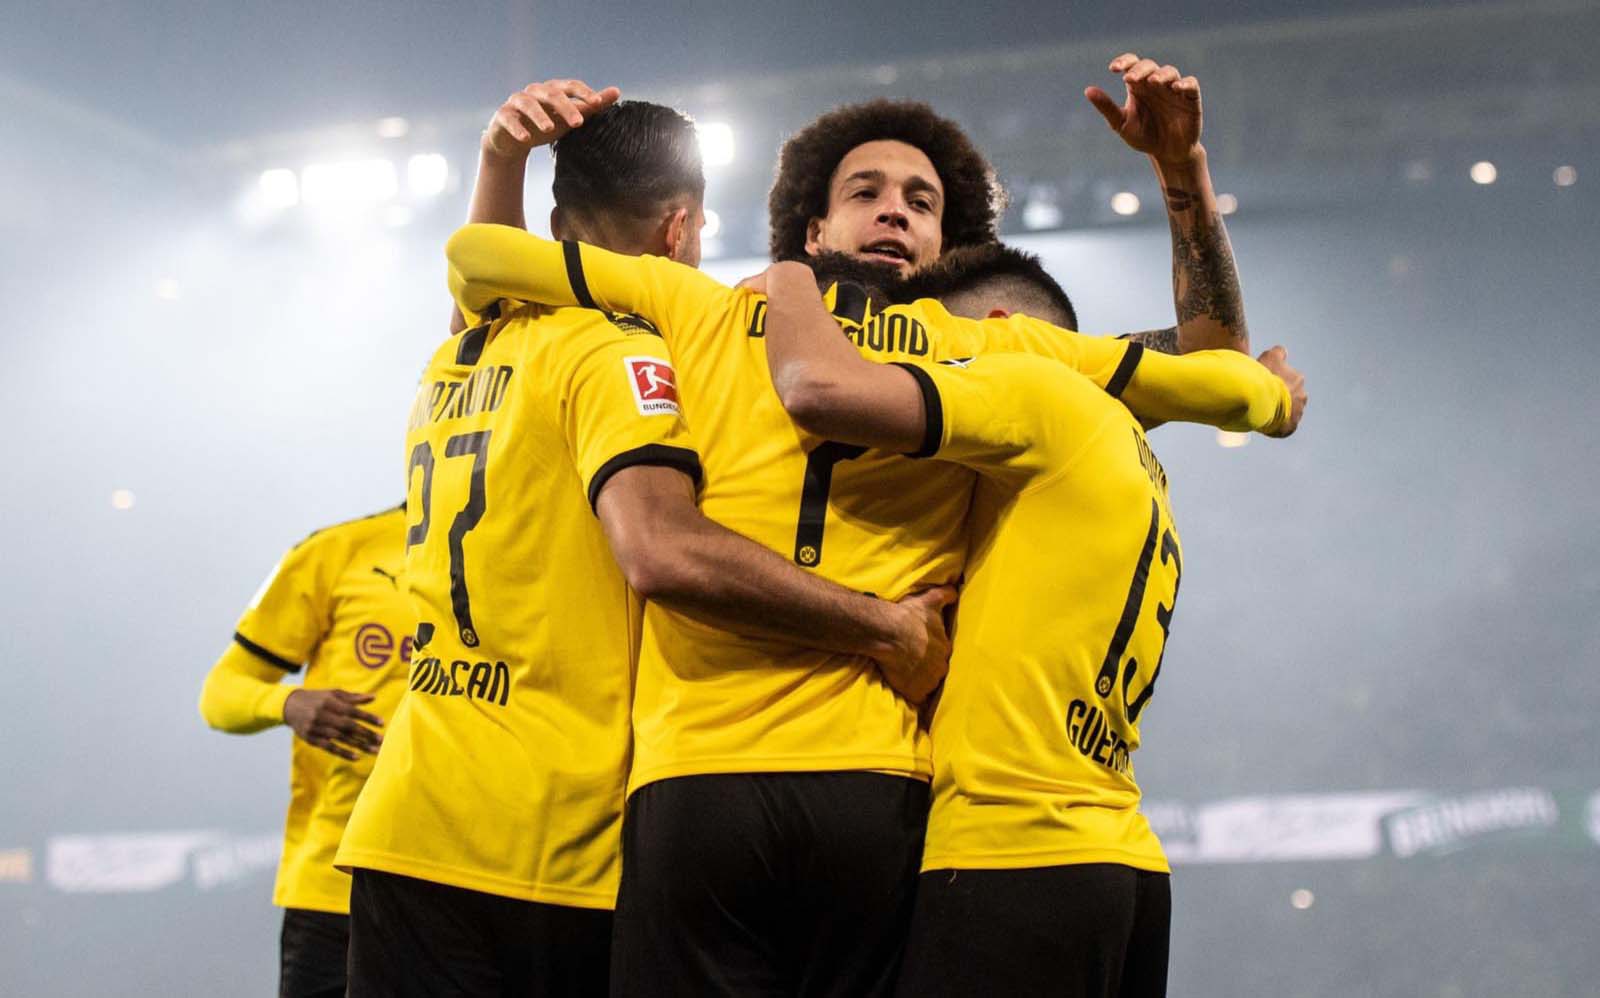 Borussia Dortmund cruise past Eintracht Frankfurt 4-0 to go second in Bundesliga